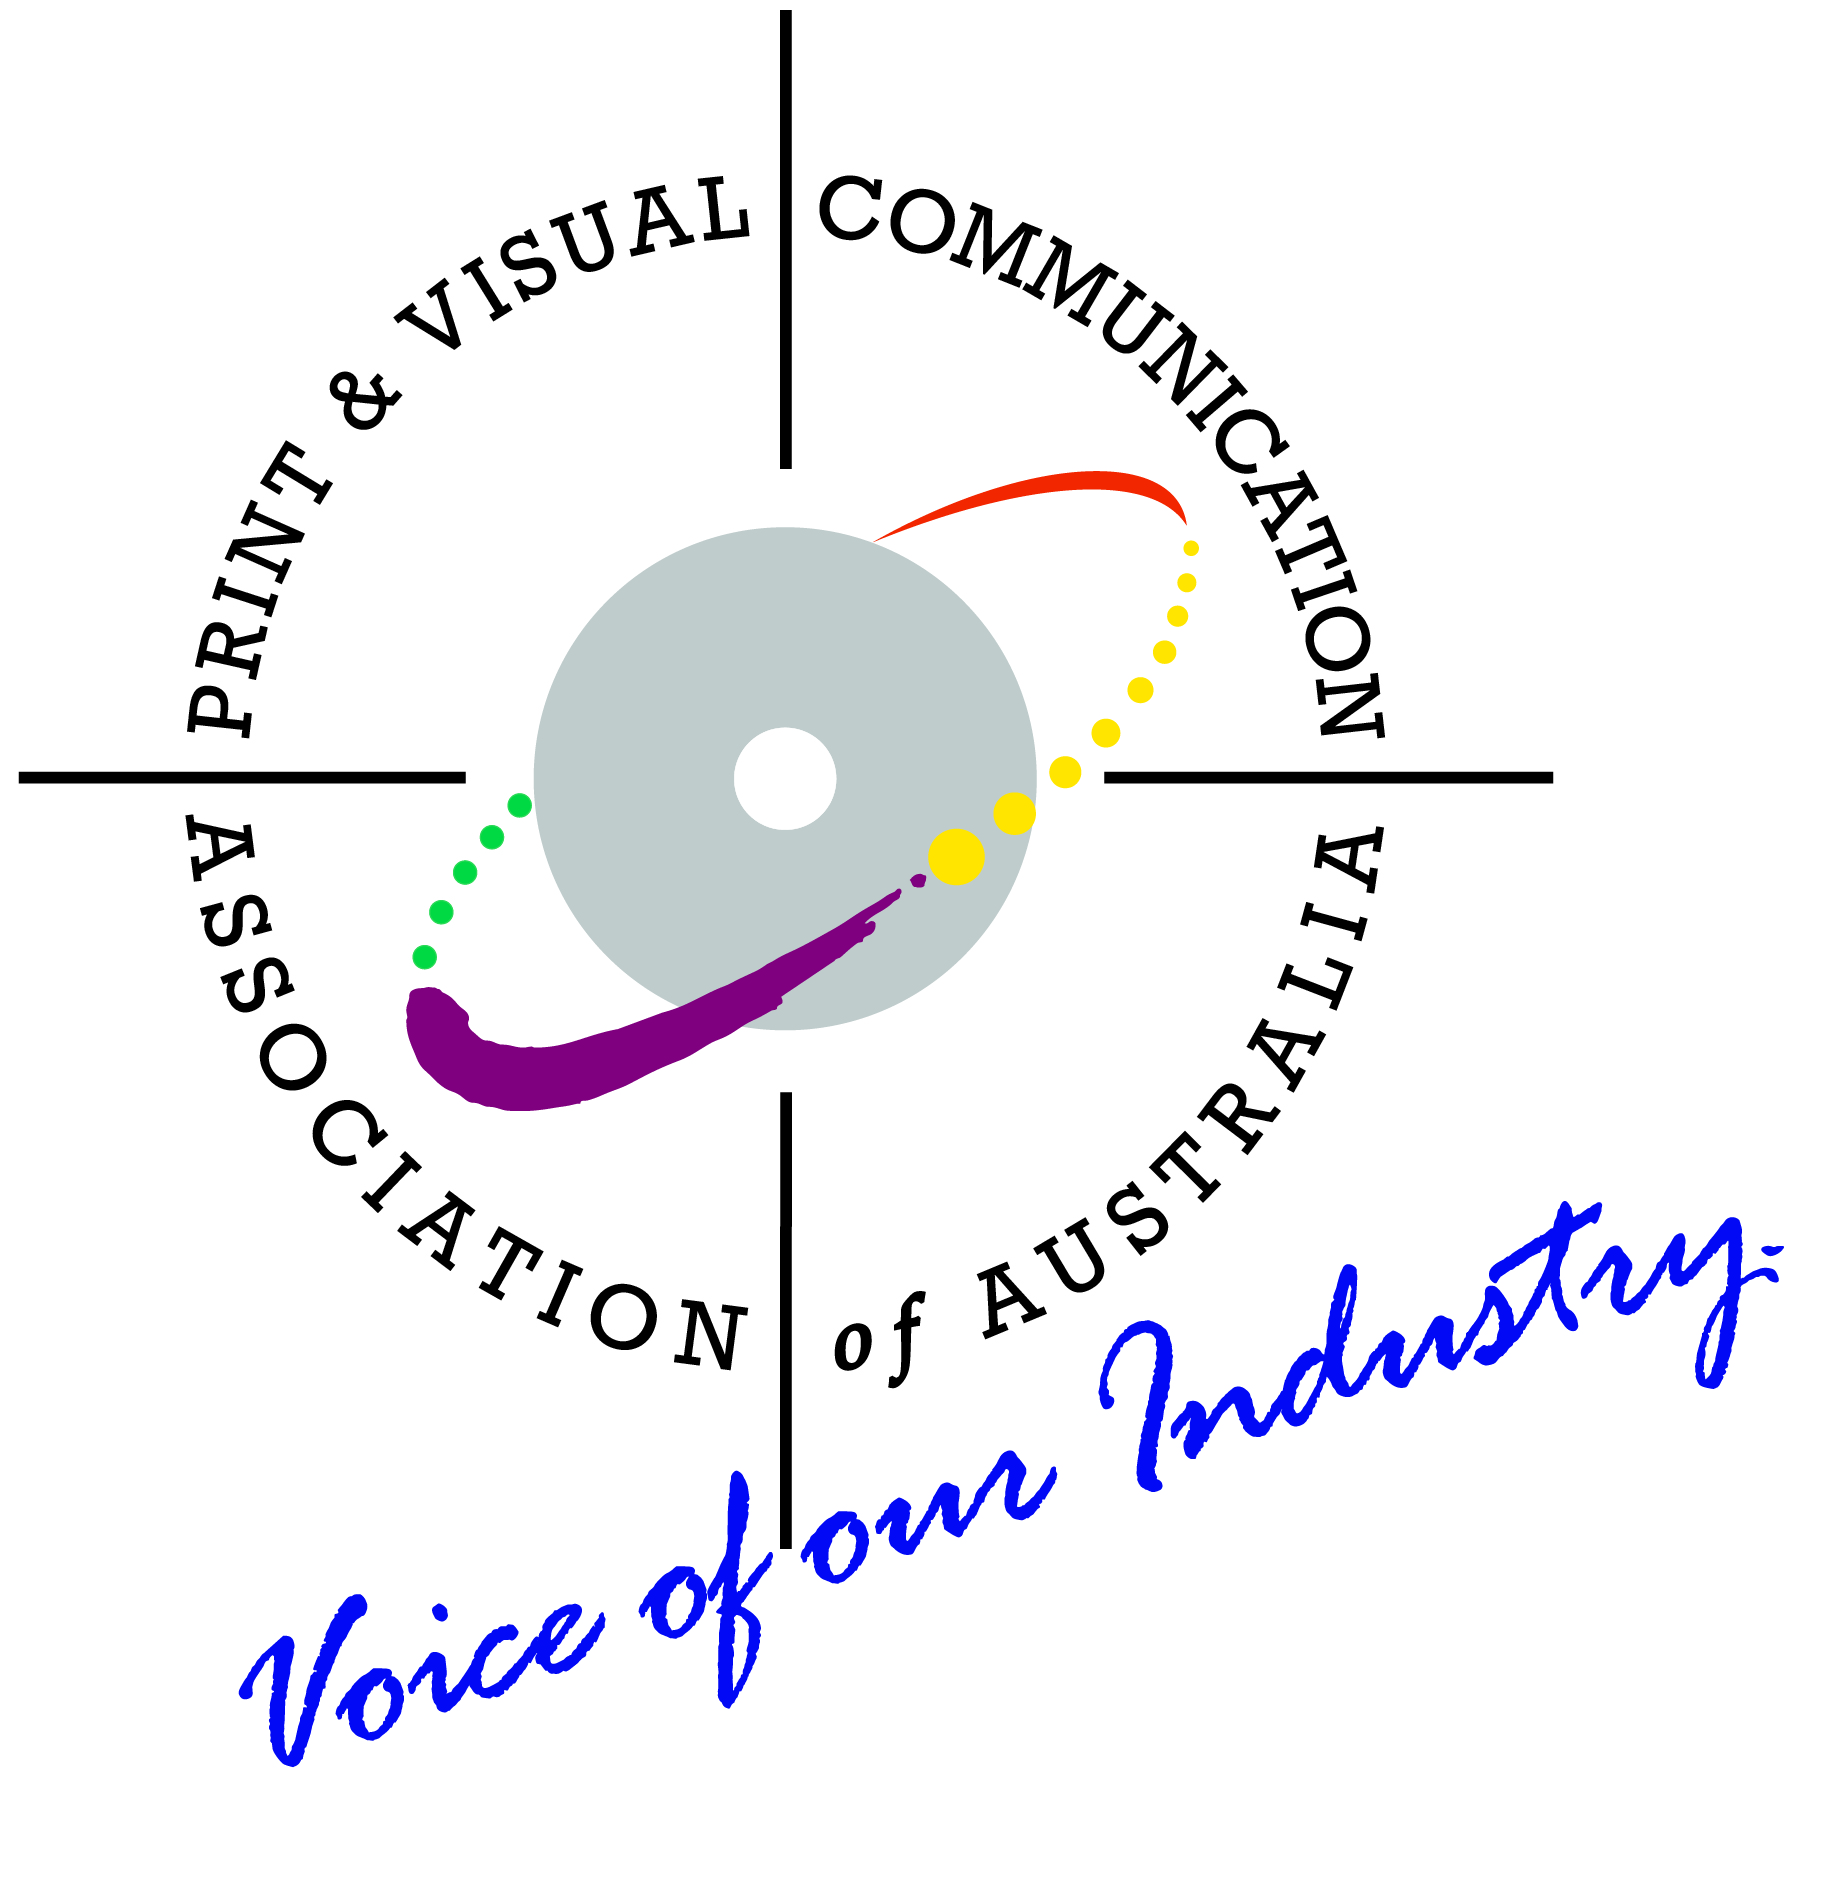 Print and Visual Communications Association